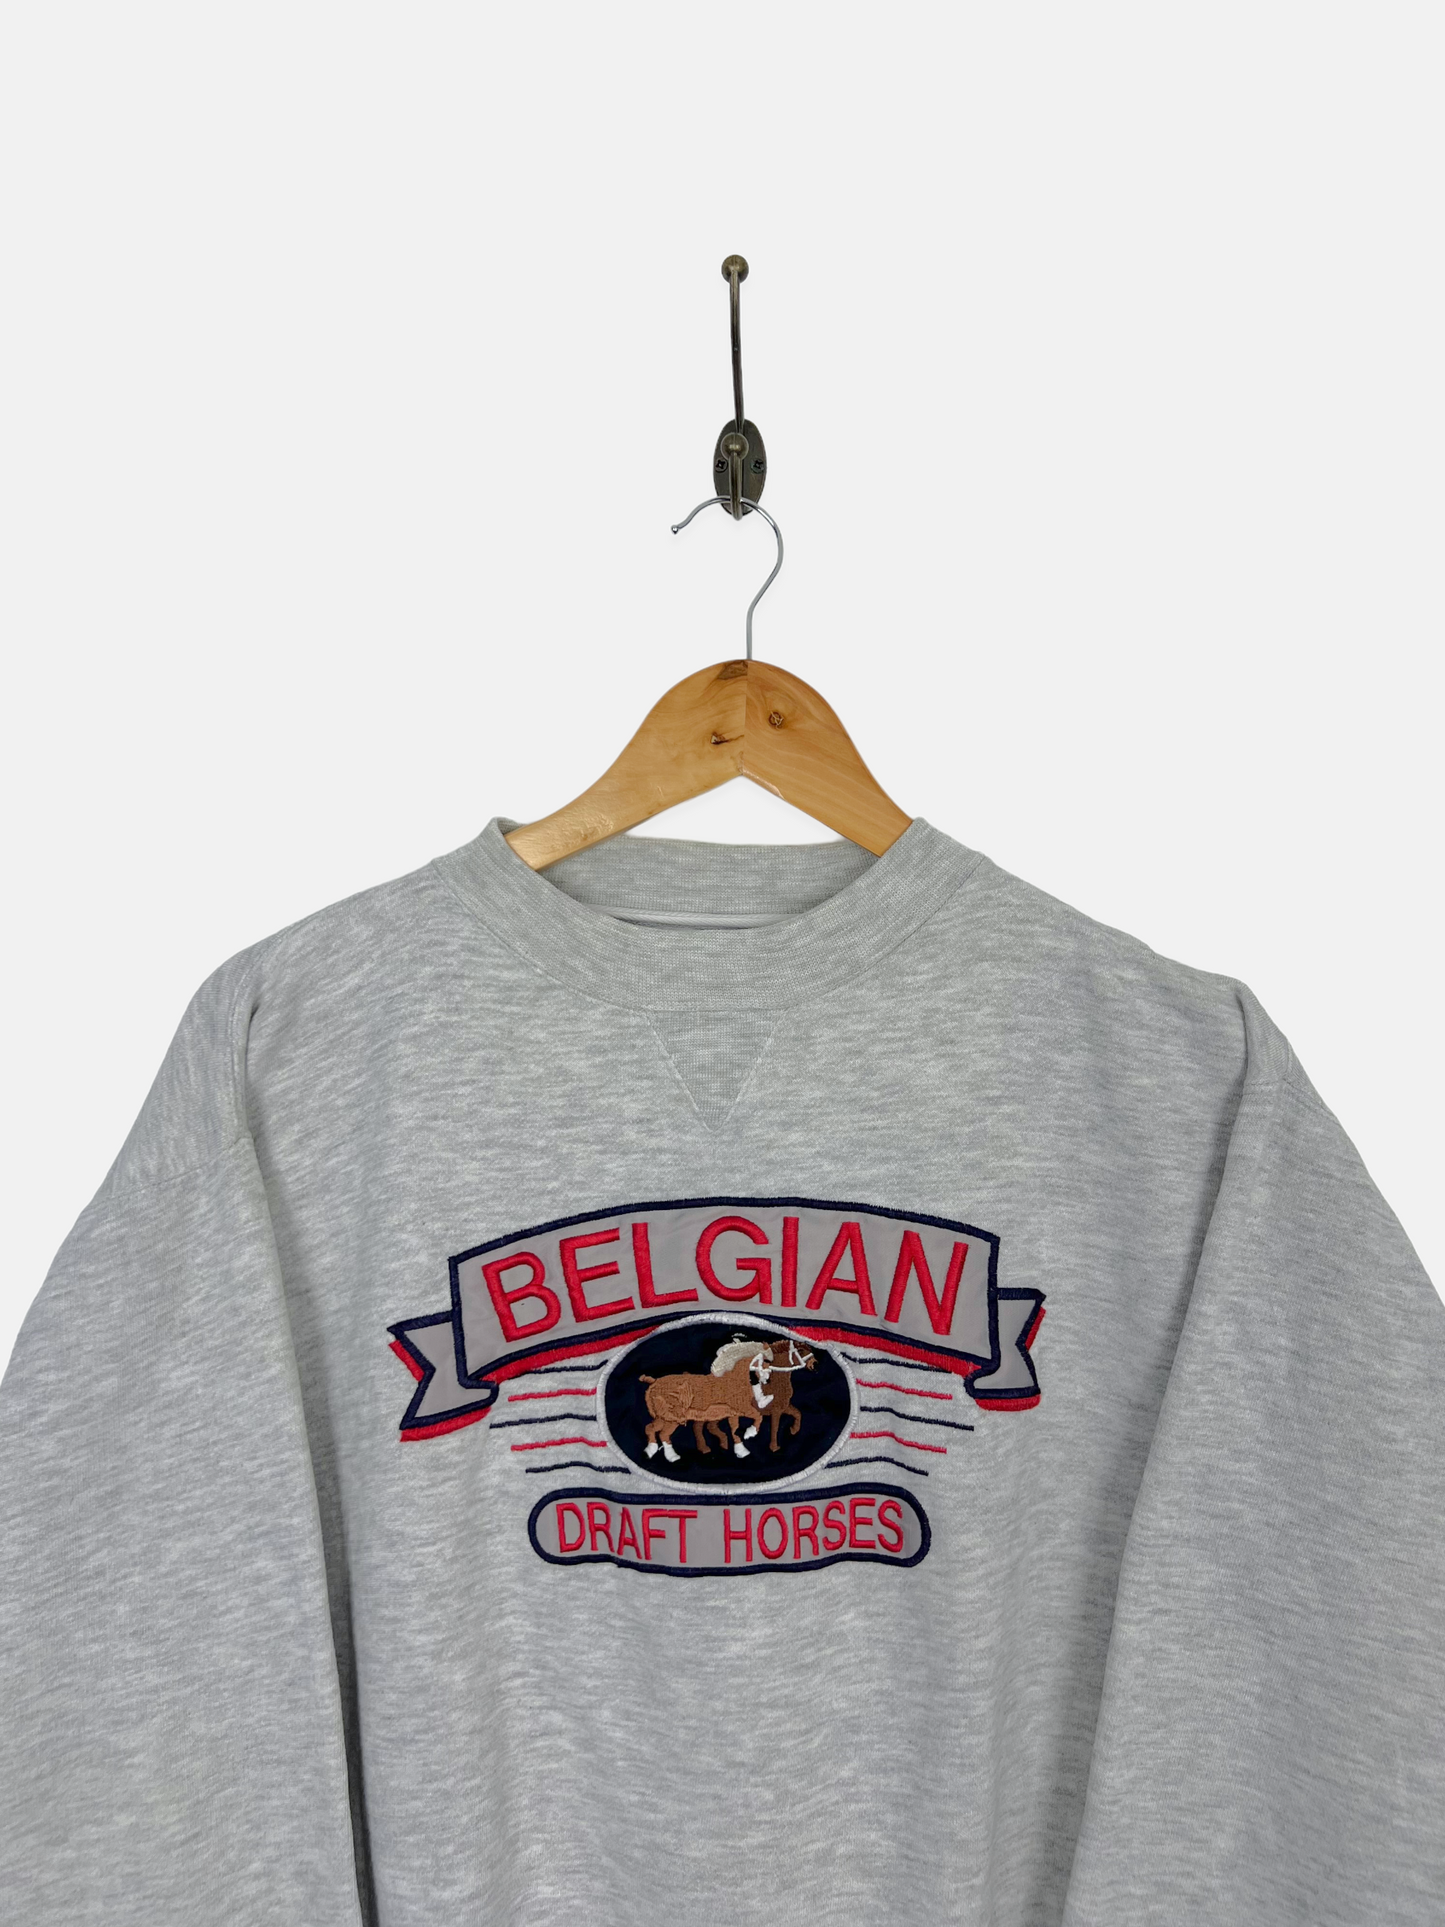 90's Belgian Draft Horses Embroidered Vintage Sweatshirt Size 12